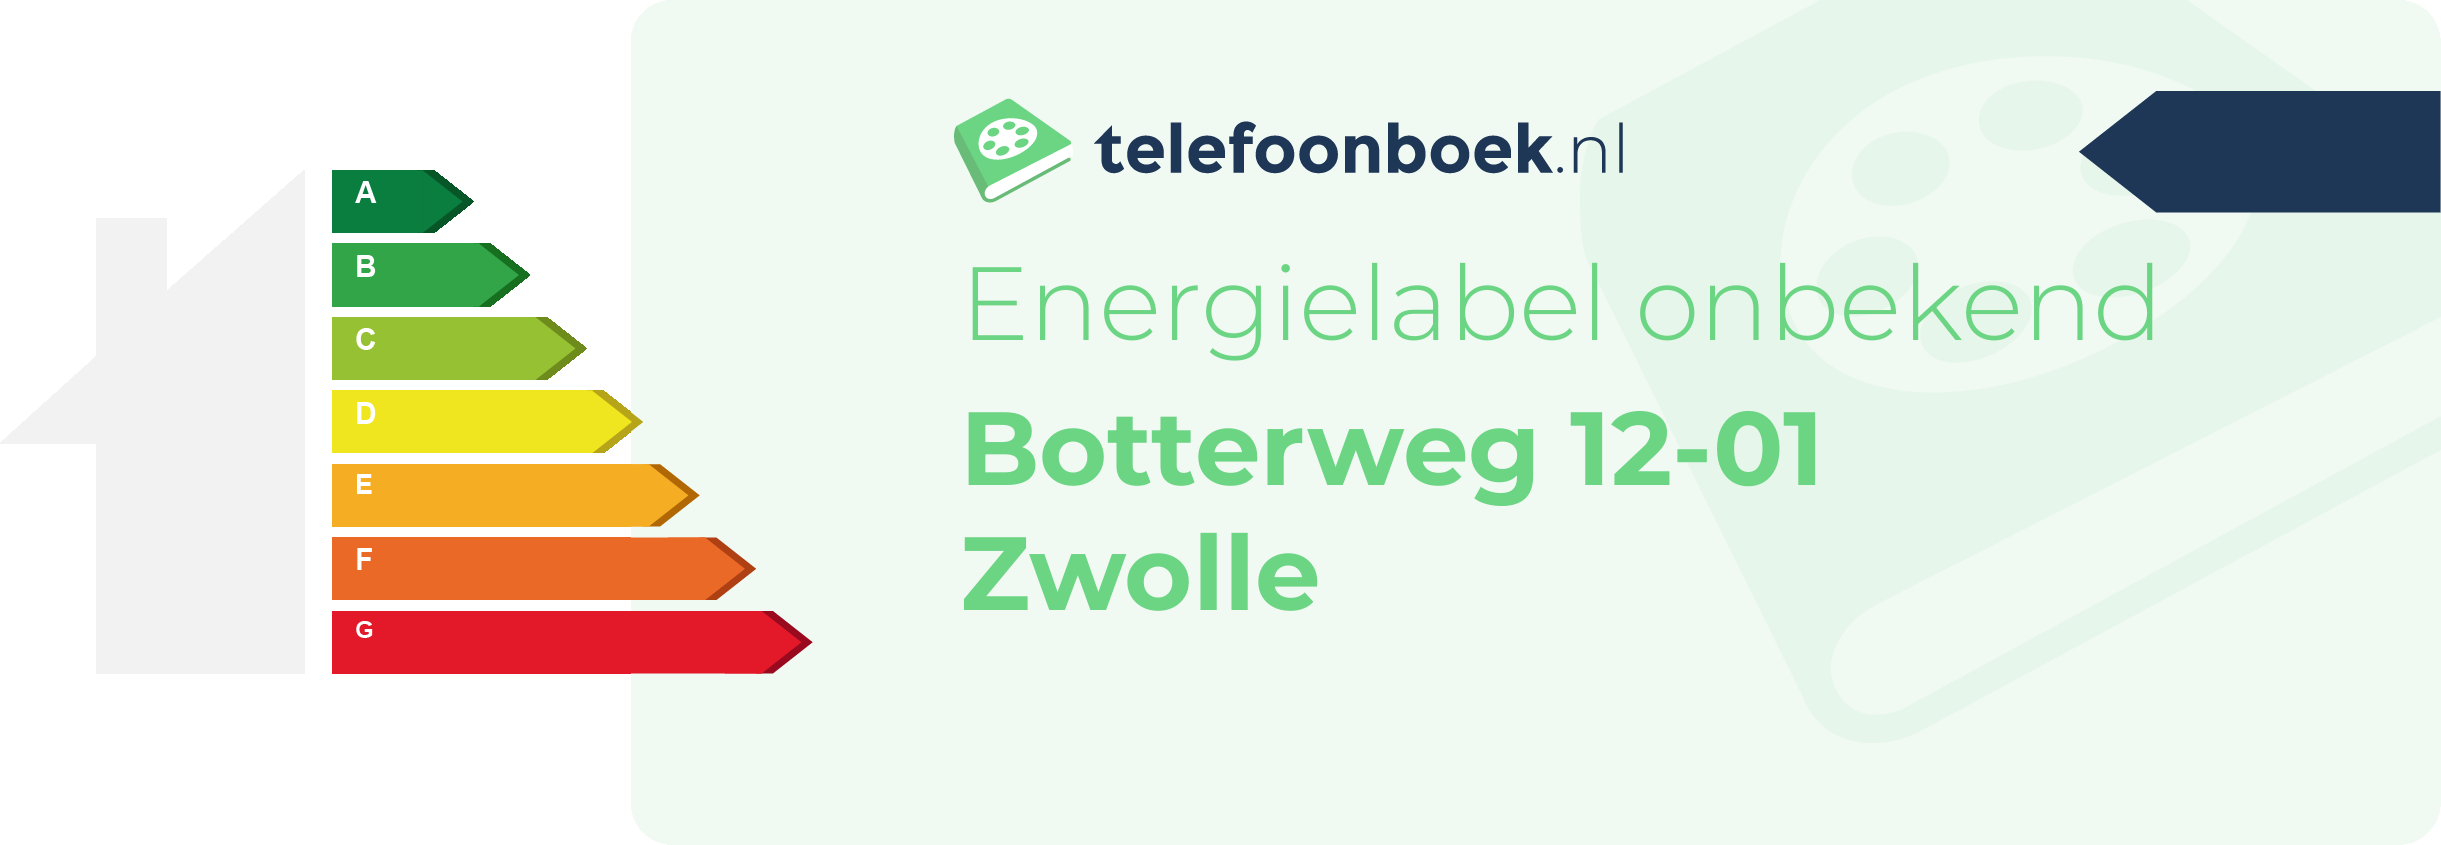 Energielabel Botterweg 12-01 Zwolle